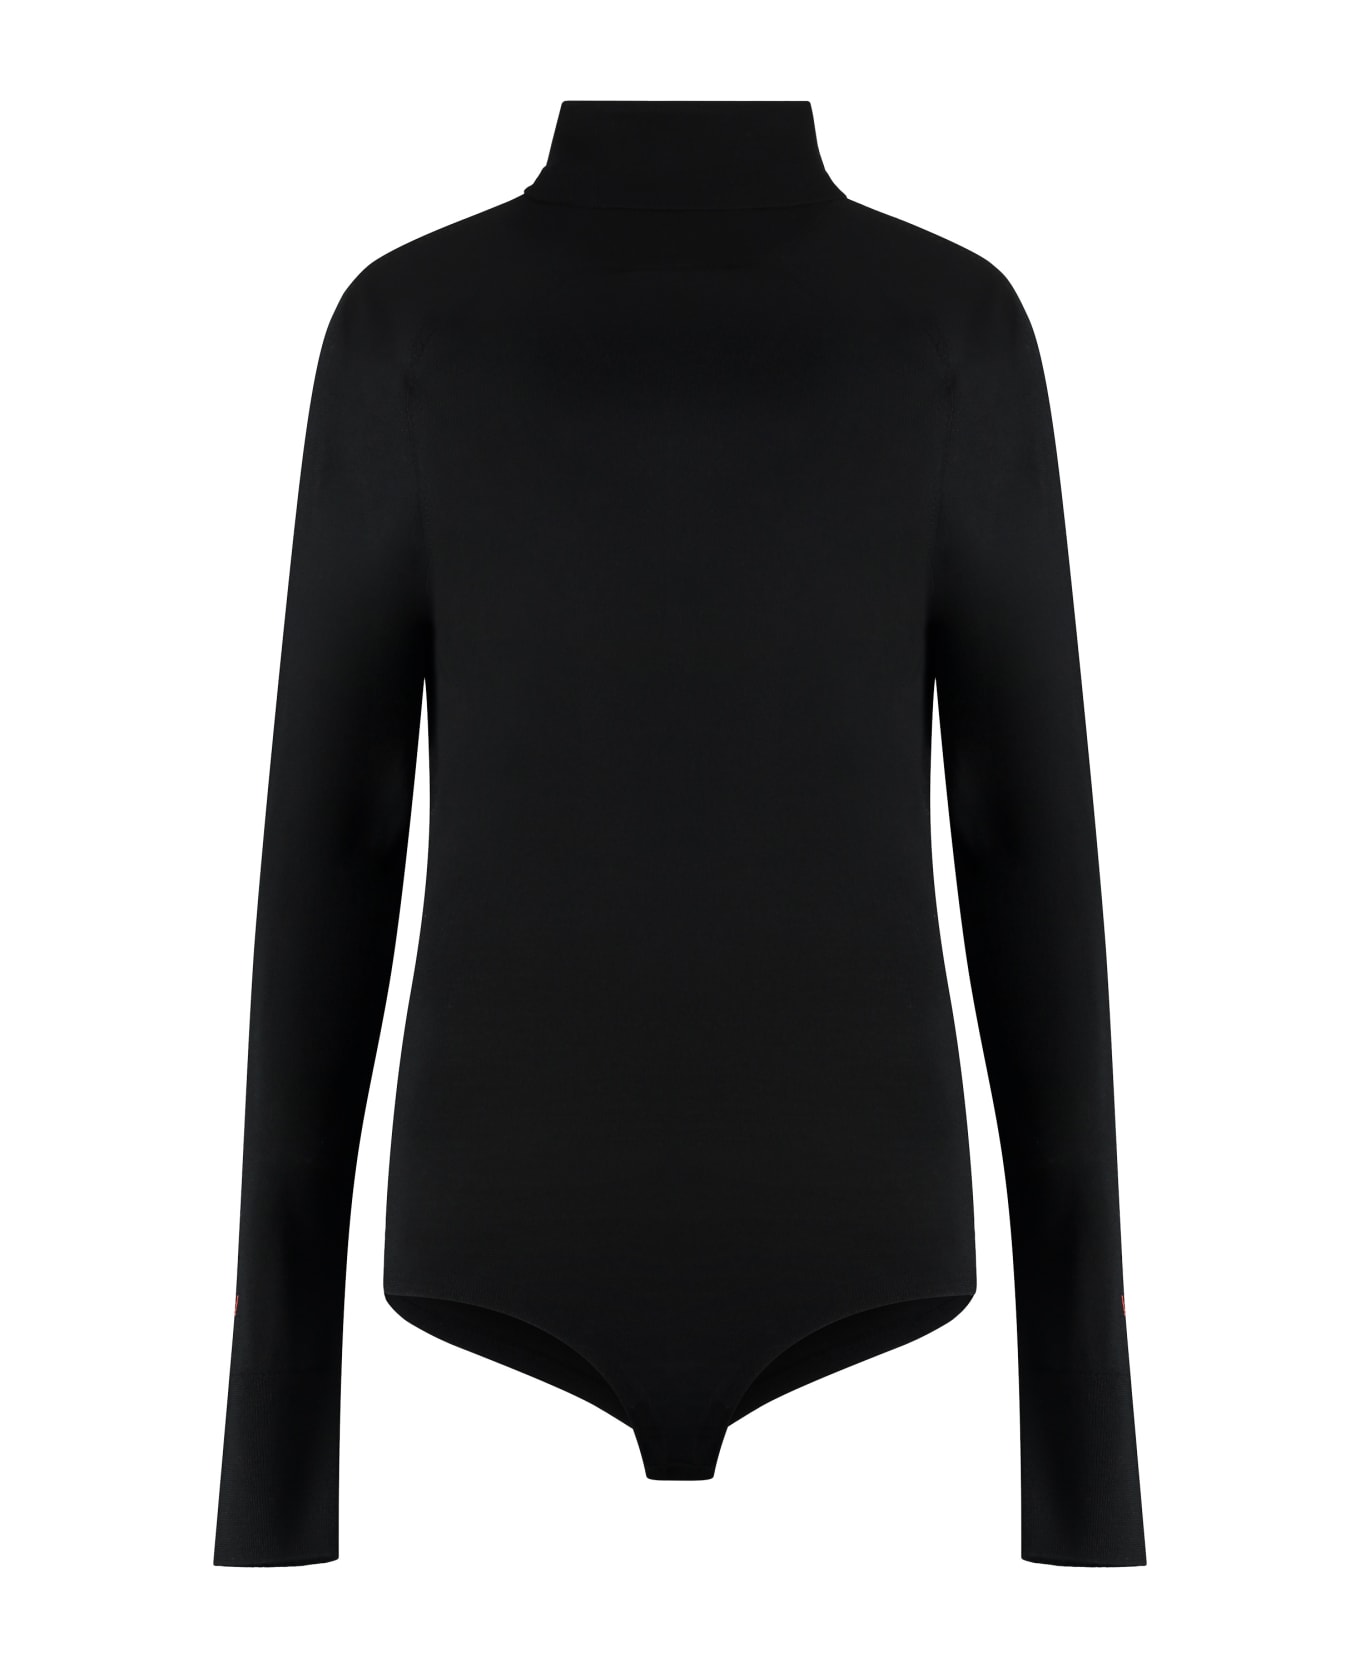 Victoria Beckham Knit Bodysuit - black